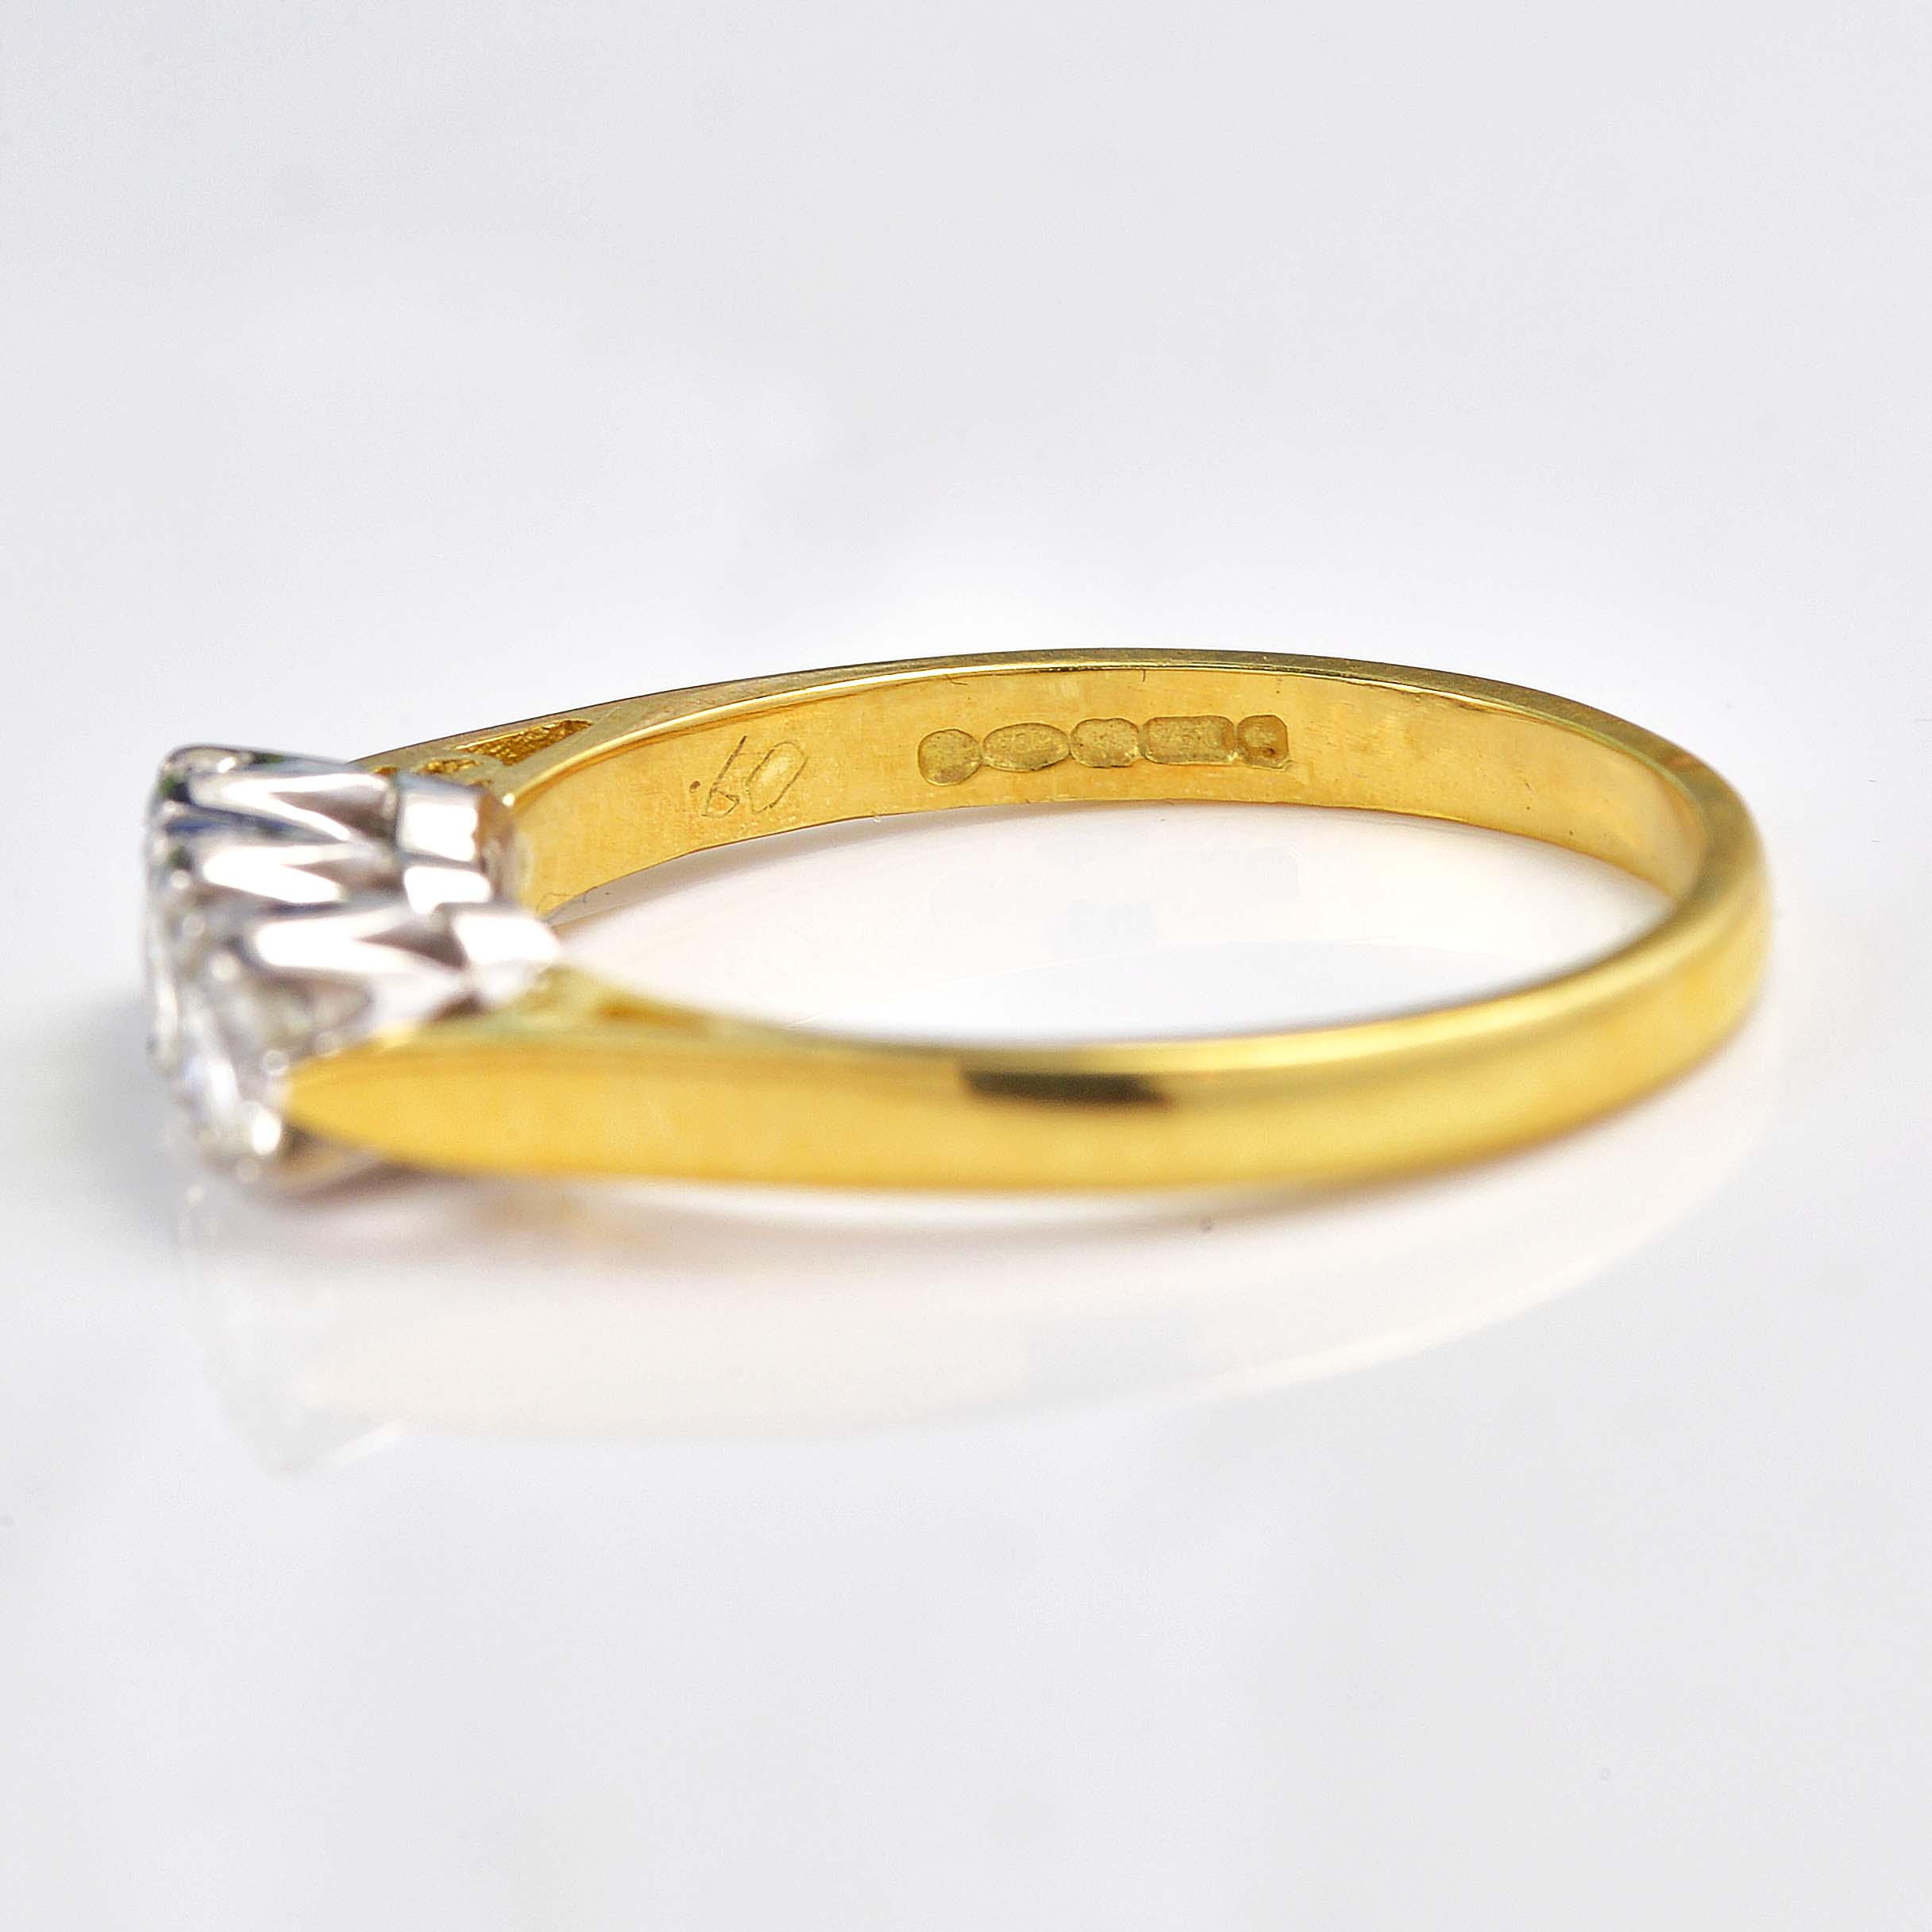 Ellibelle Jewellery Vintage Diamond 18ct Gold Three-Stone Engagement Ring (0.60ct)